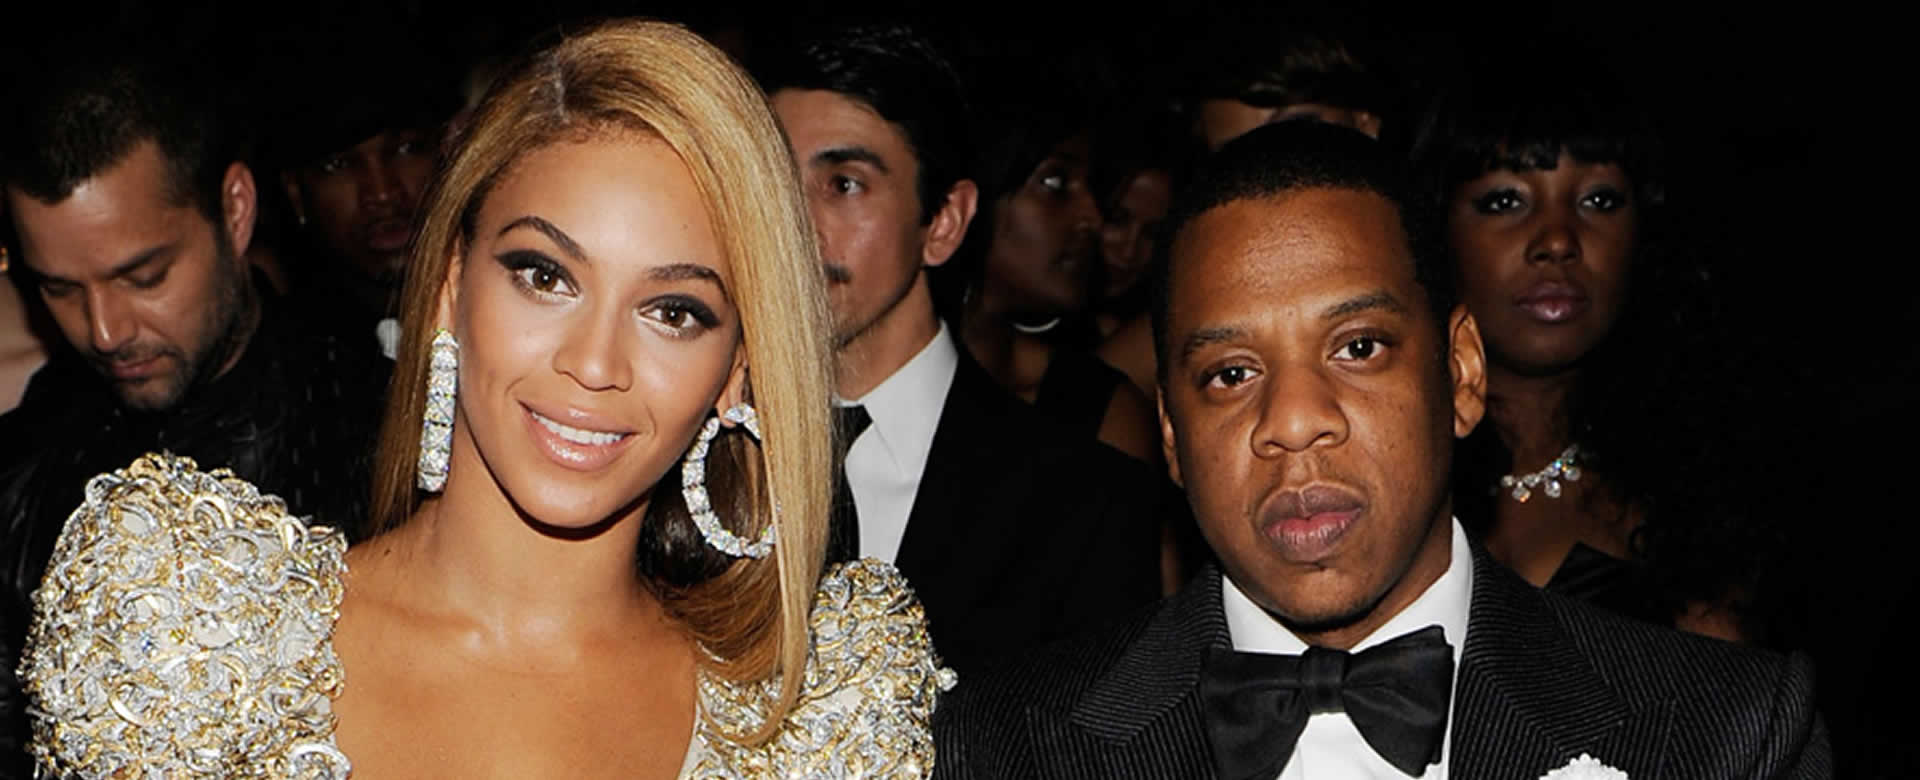 Bayoncé revelan fotos íntimas junto a sus esposo Jay Z